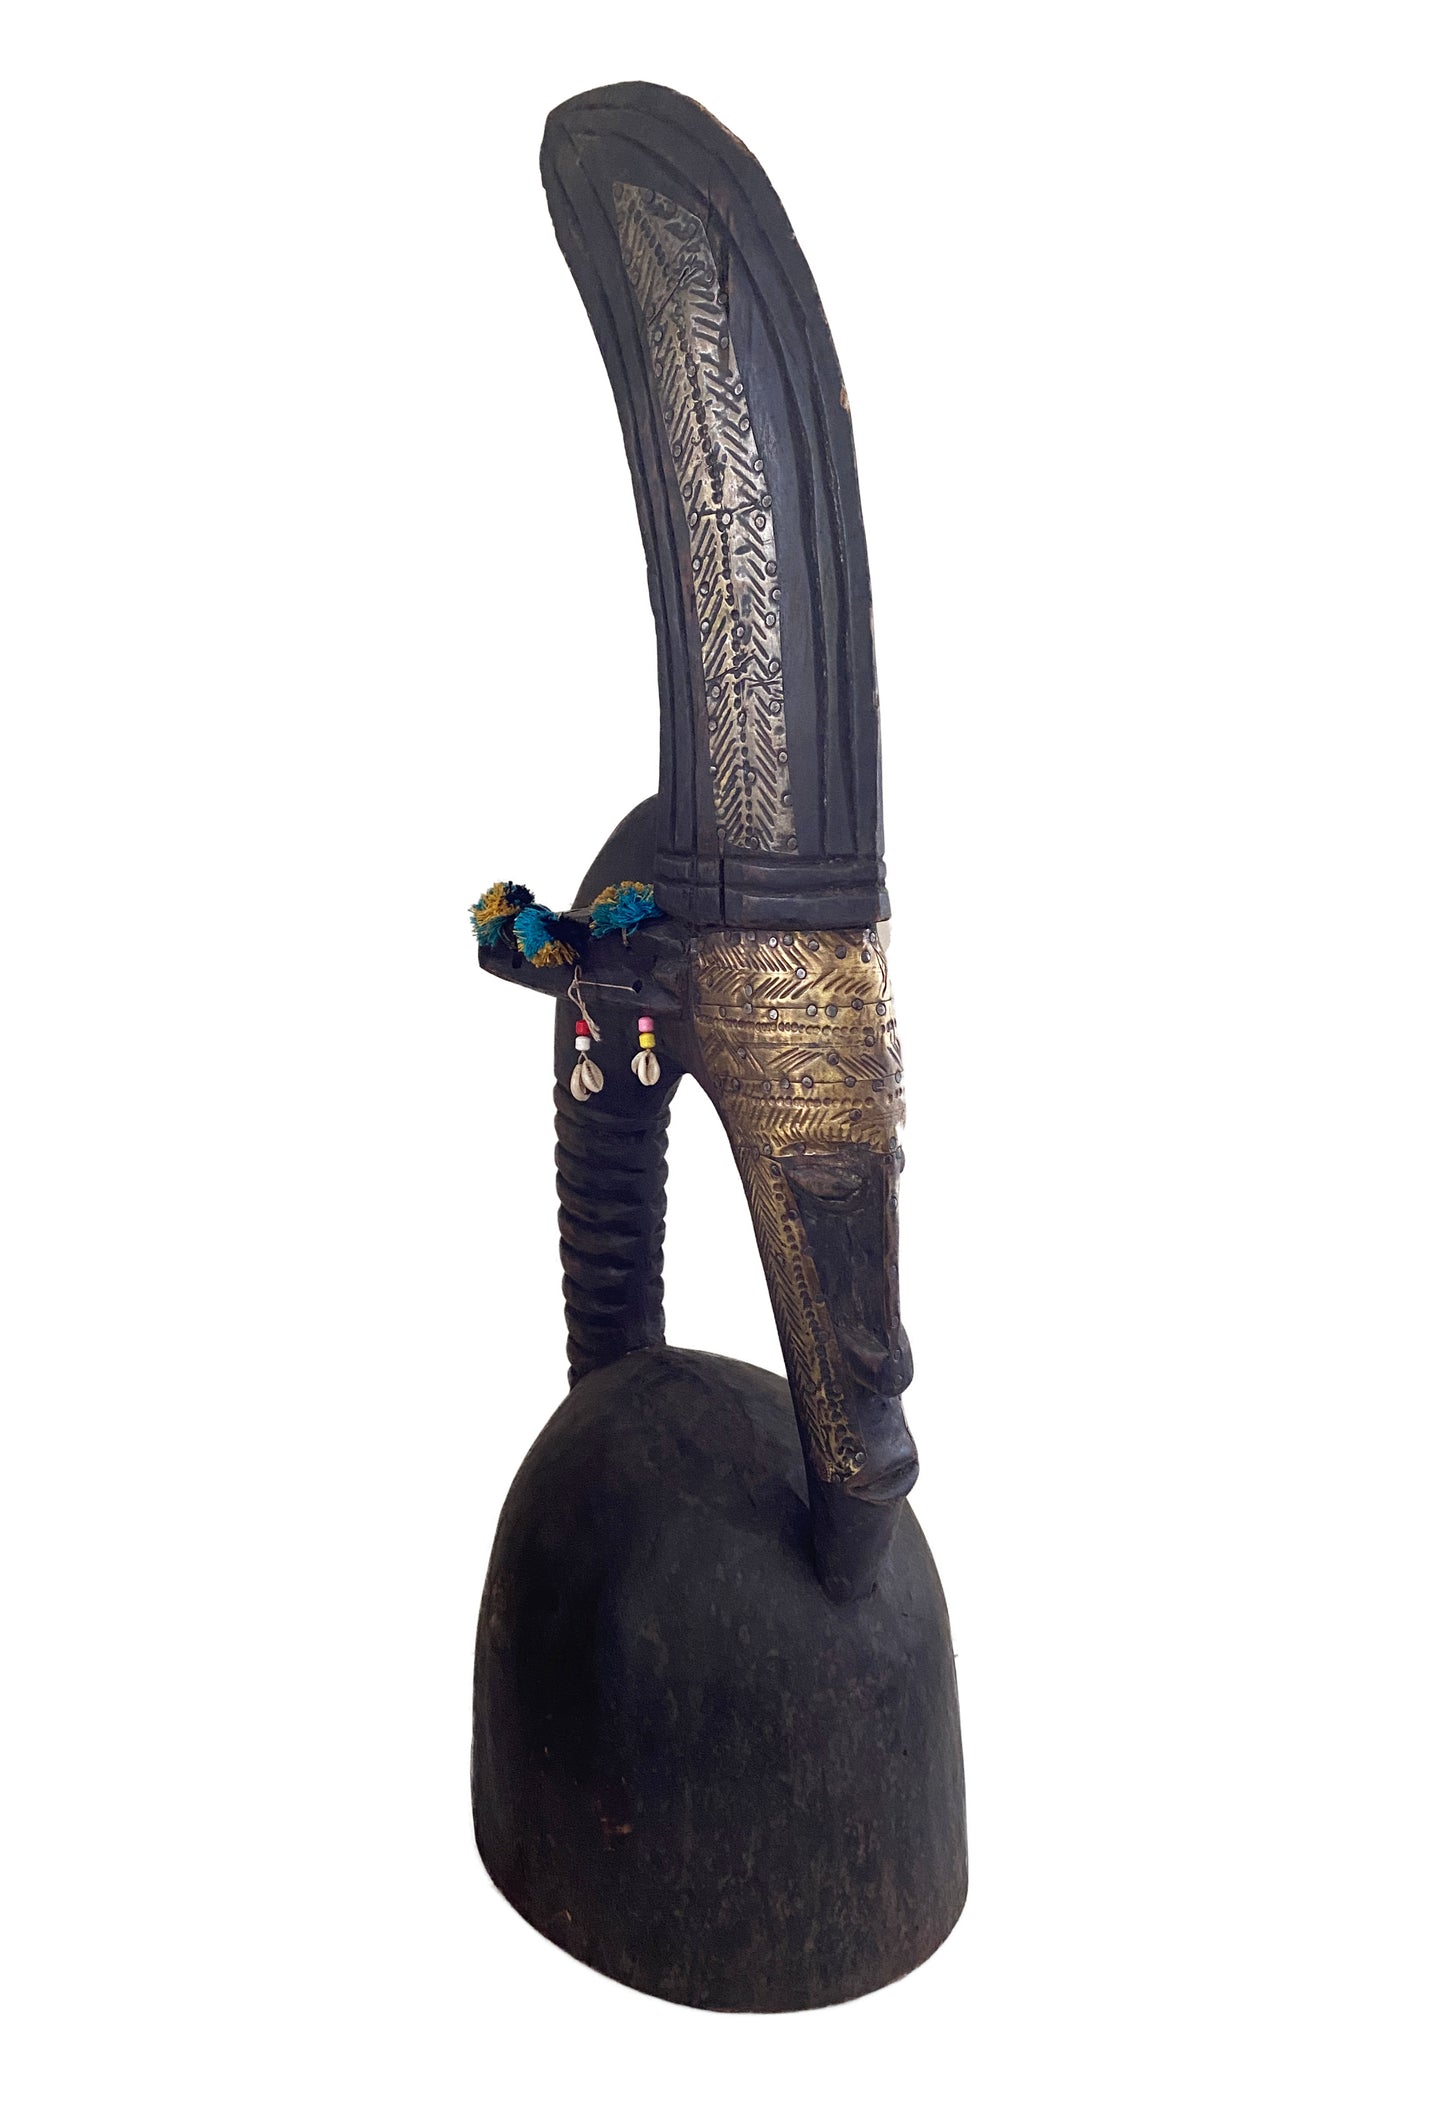 #3662 Lg Bamana Male Antelope Chiwara Helmet Mali African Art 28" H